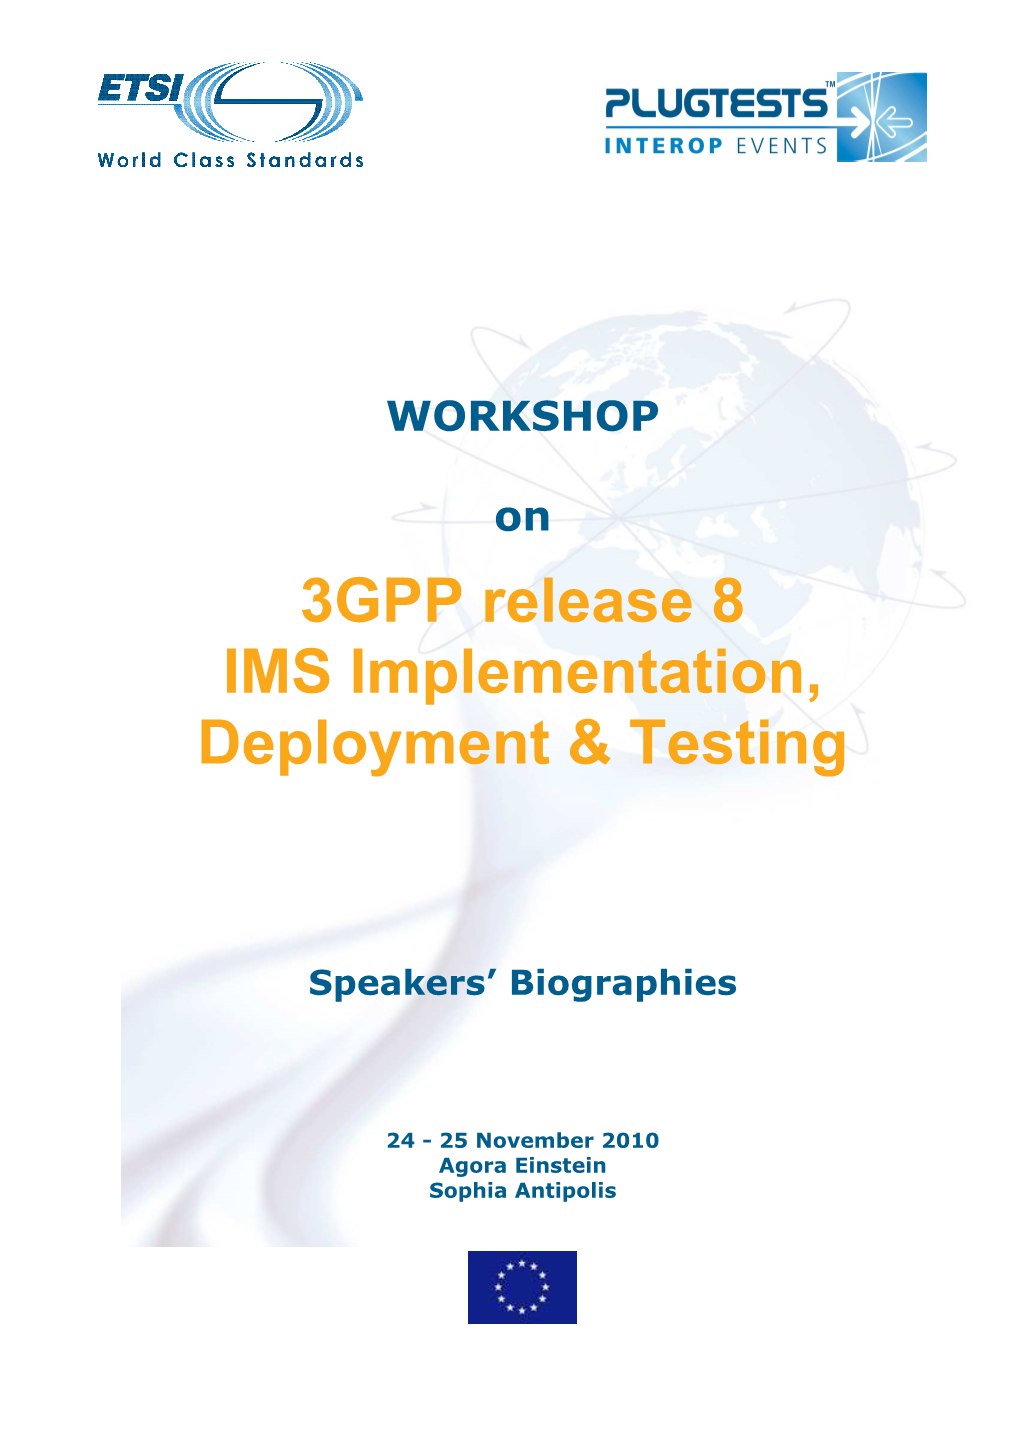 3GPP Release 8 IMS Implementation, Deployment & Testing